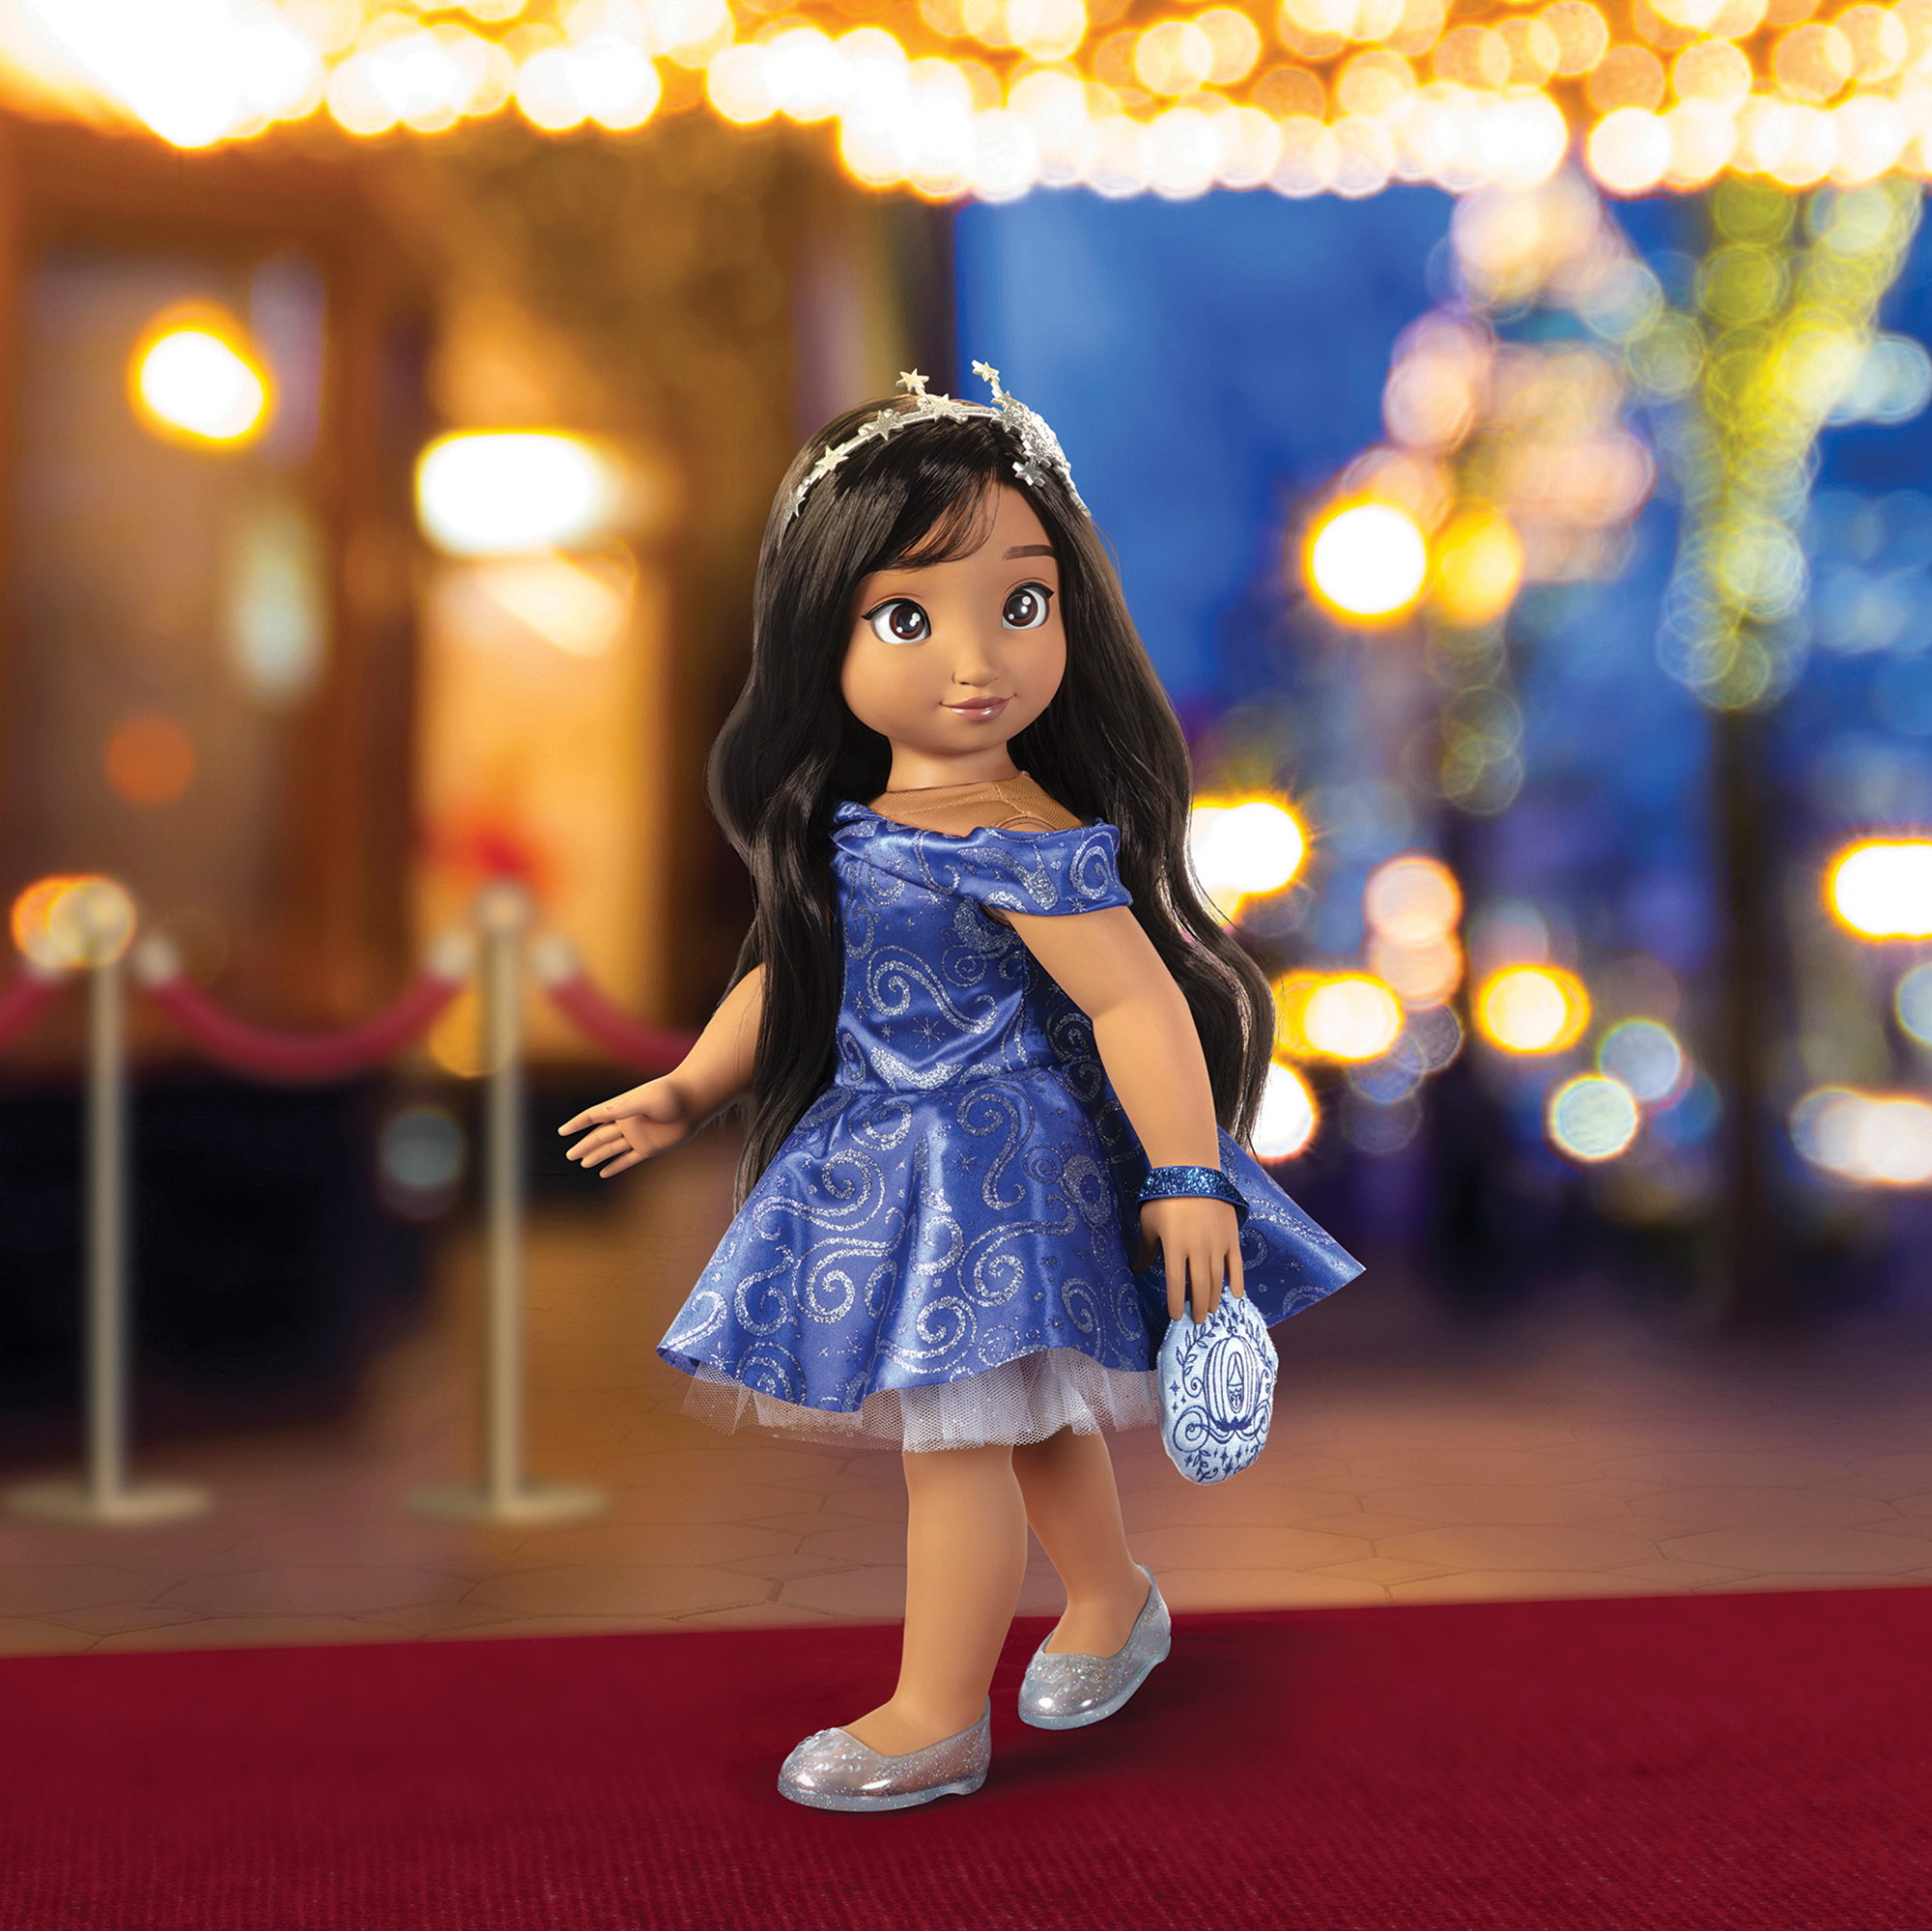 NEW Disney ily 4EVER ~ I Love Stitch Doll ~ Free Shipping!